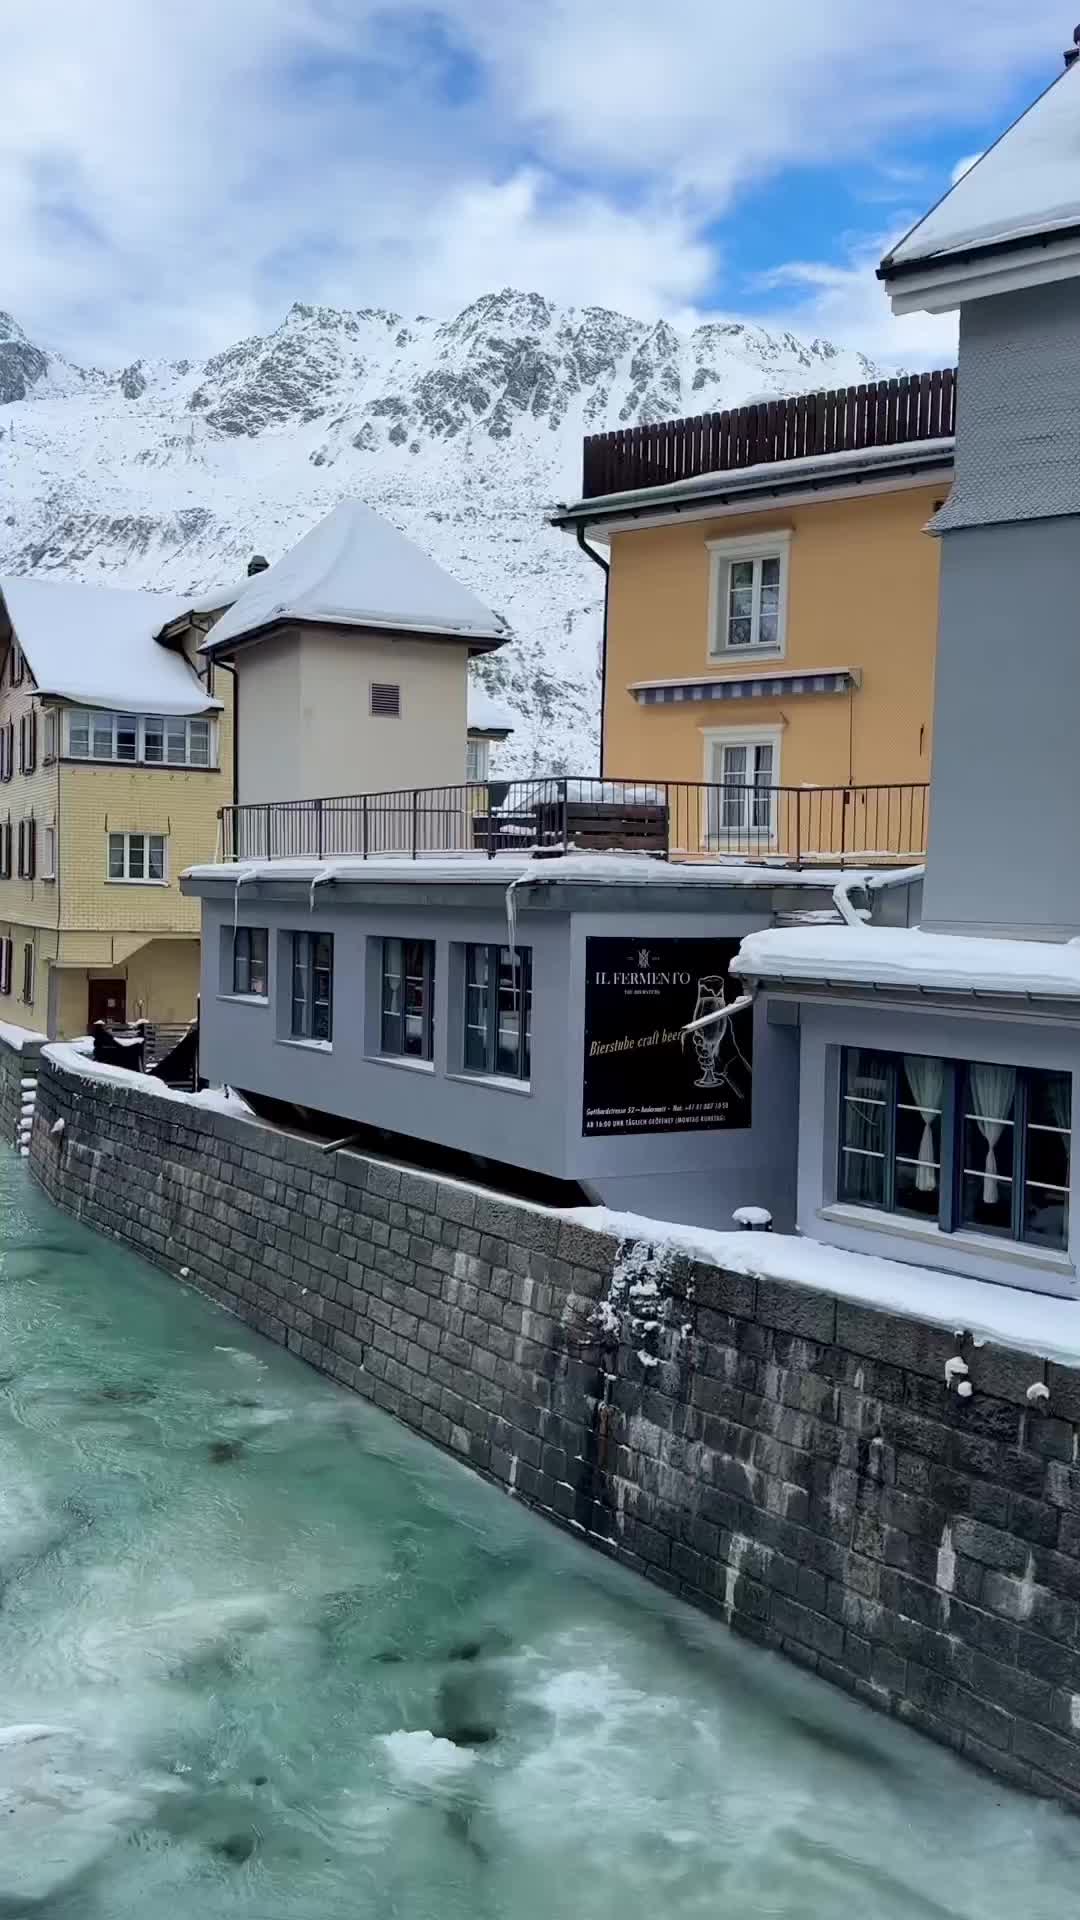 Winter Wonderland in Andermatt, Switzerland